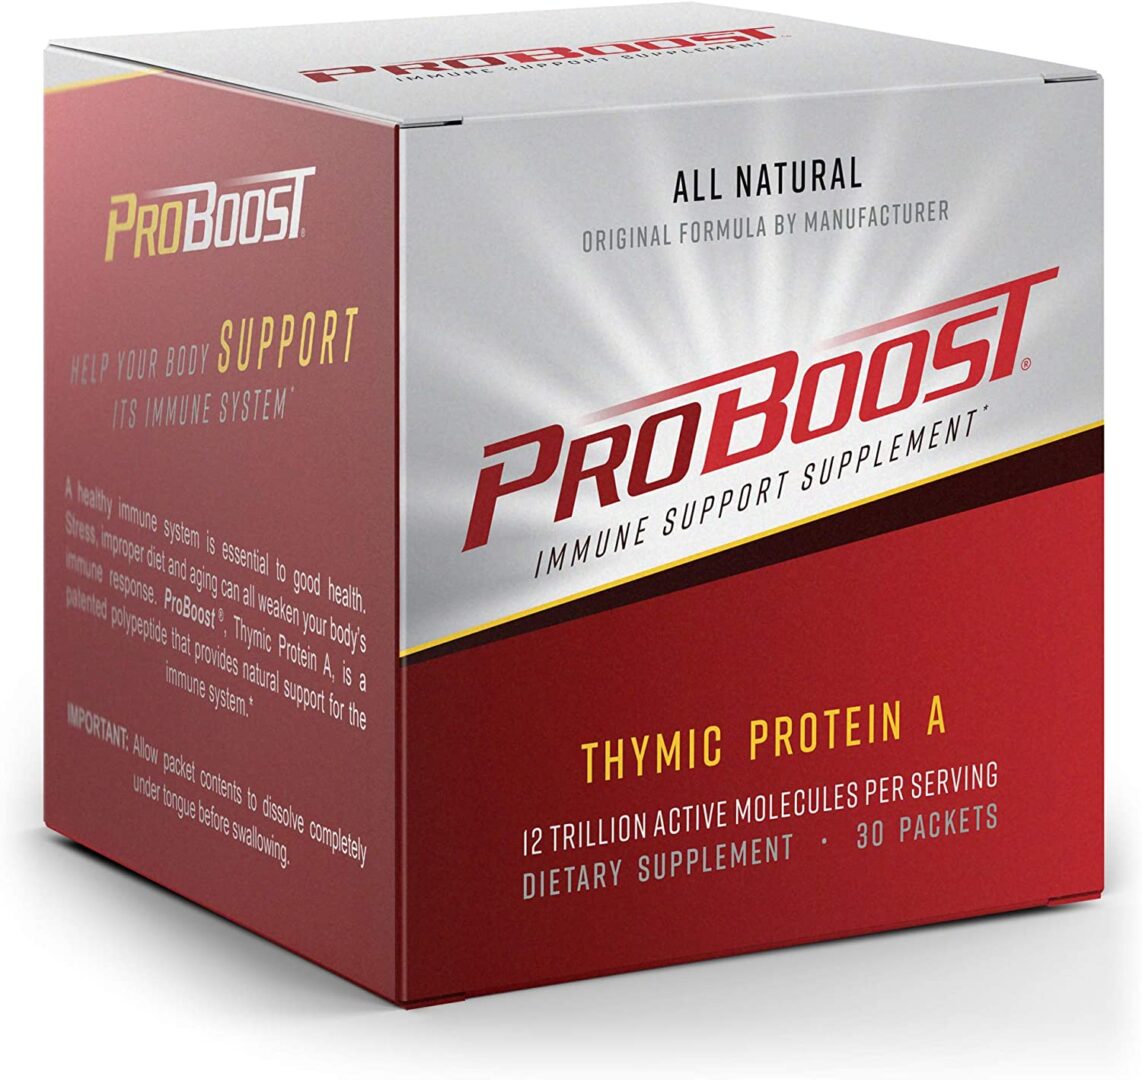 Proboost immune support supplement 30 packets